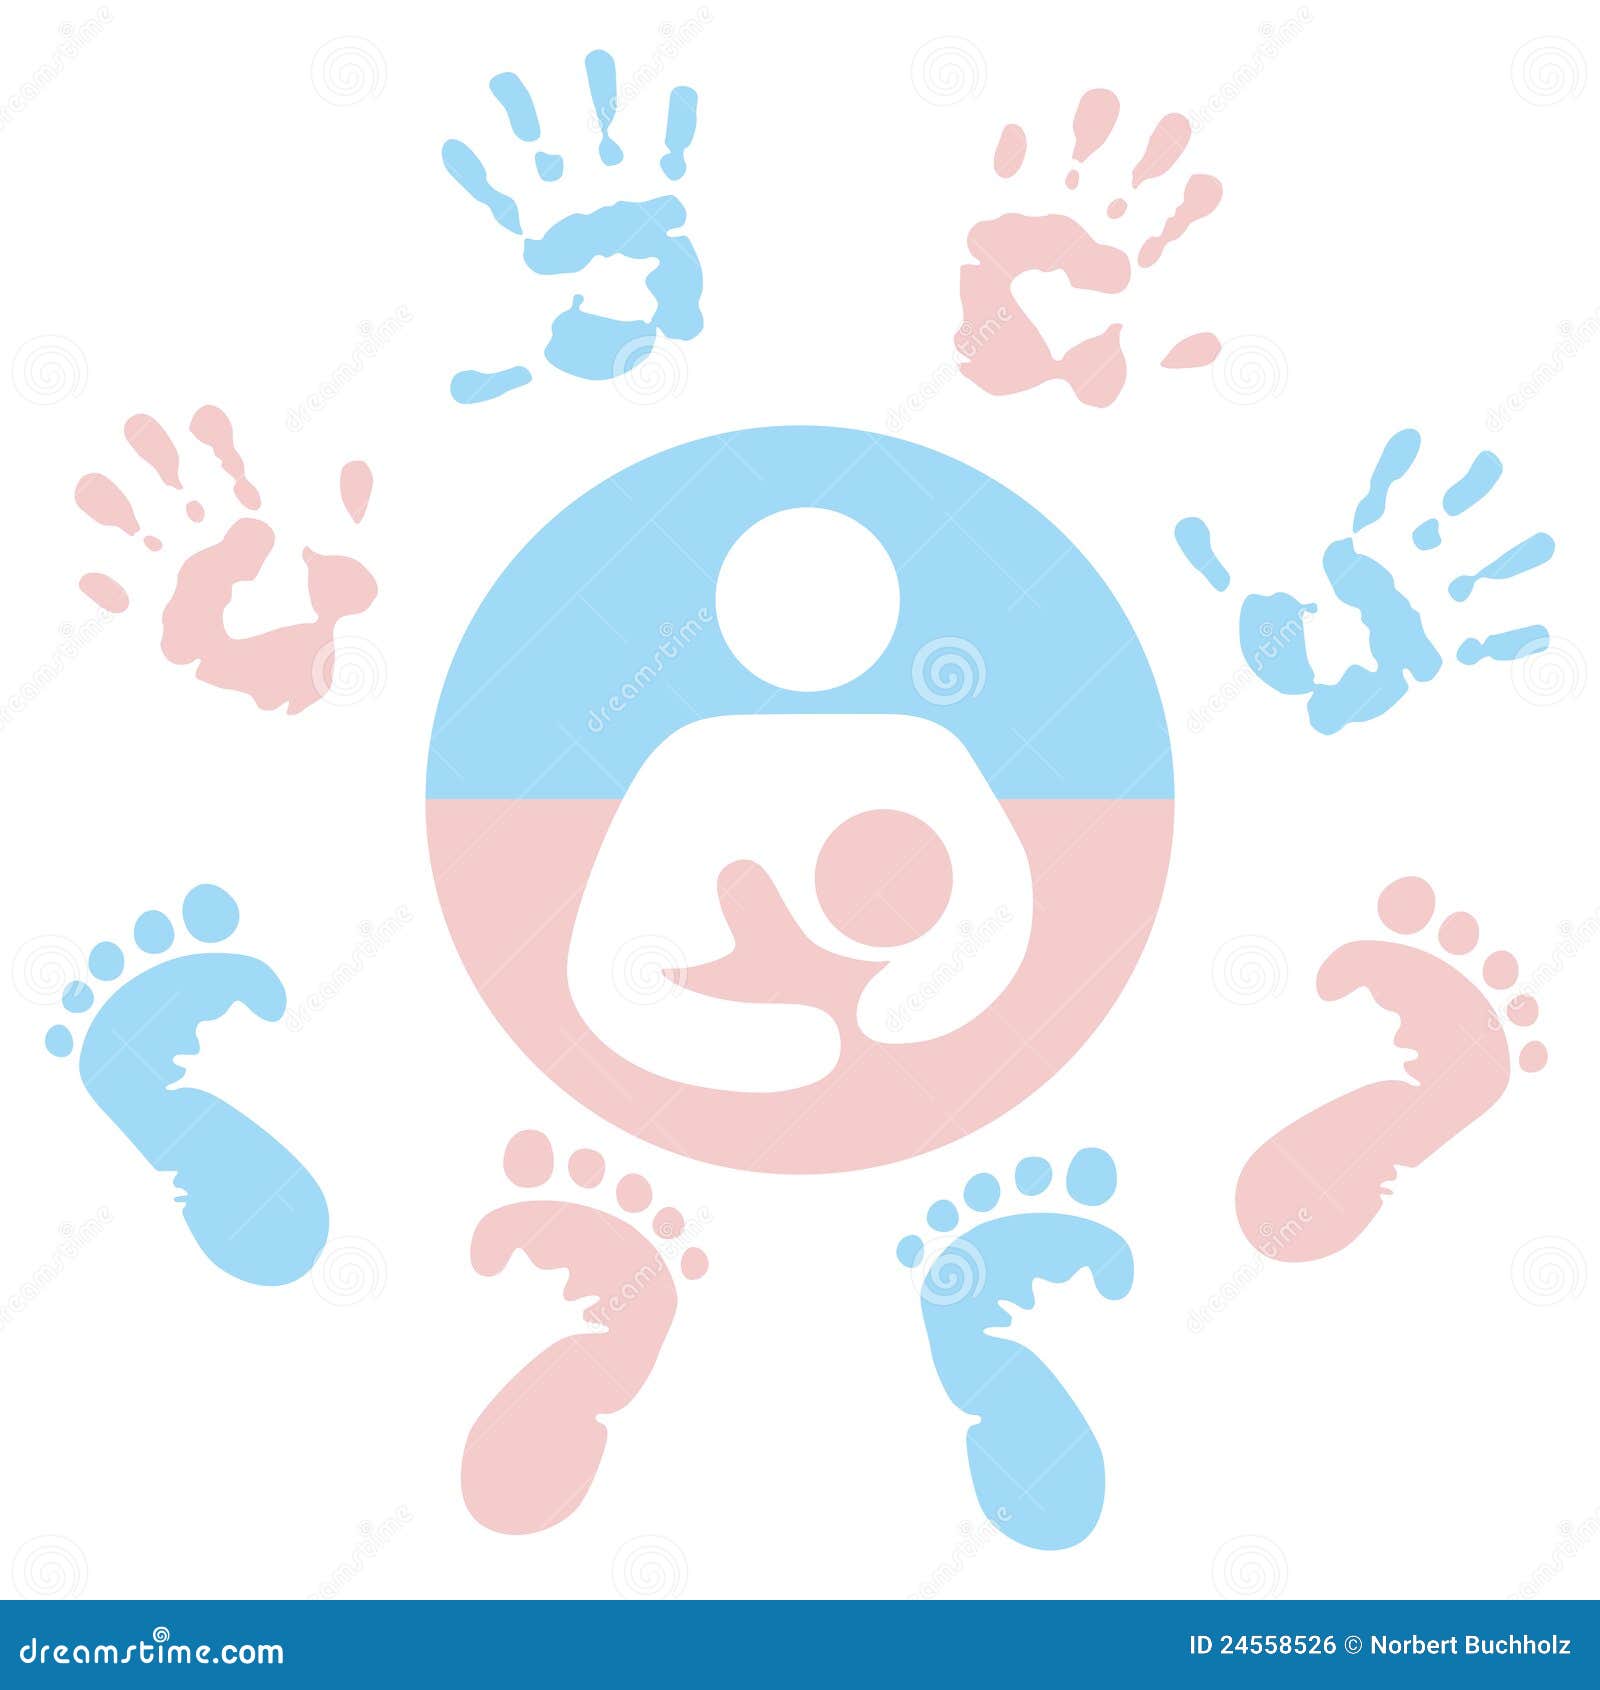 baby handprint clipart free - photo #35